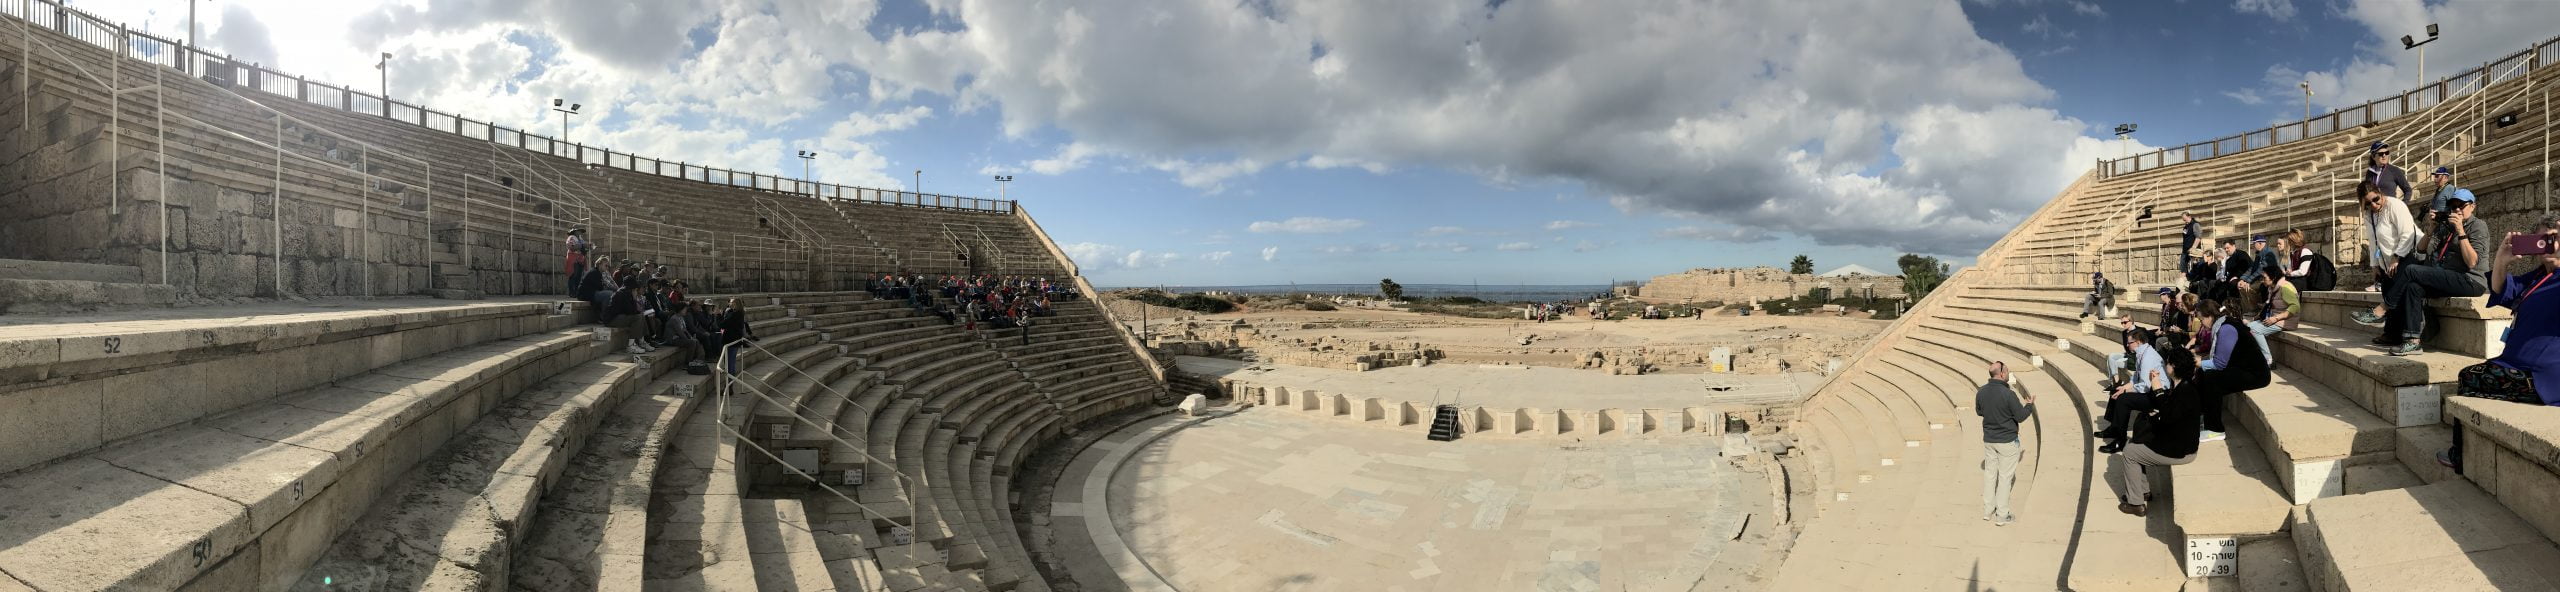  Ancient Roman amphitheater